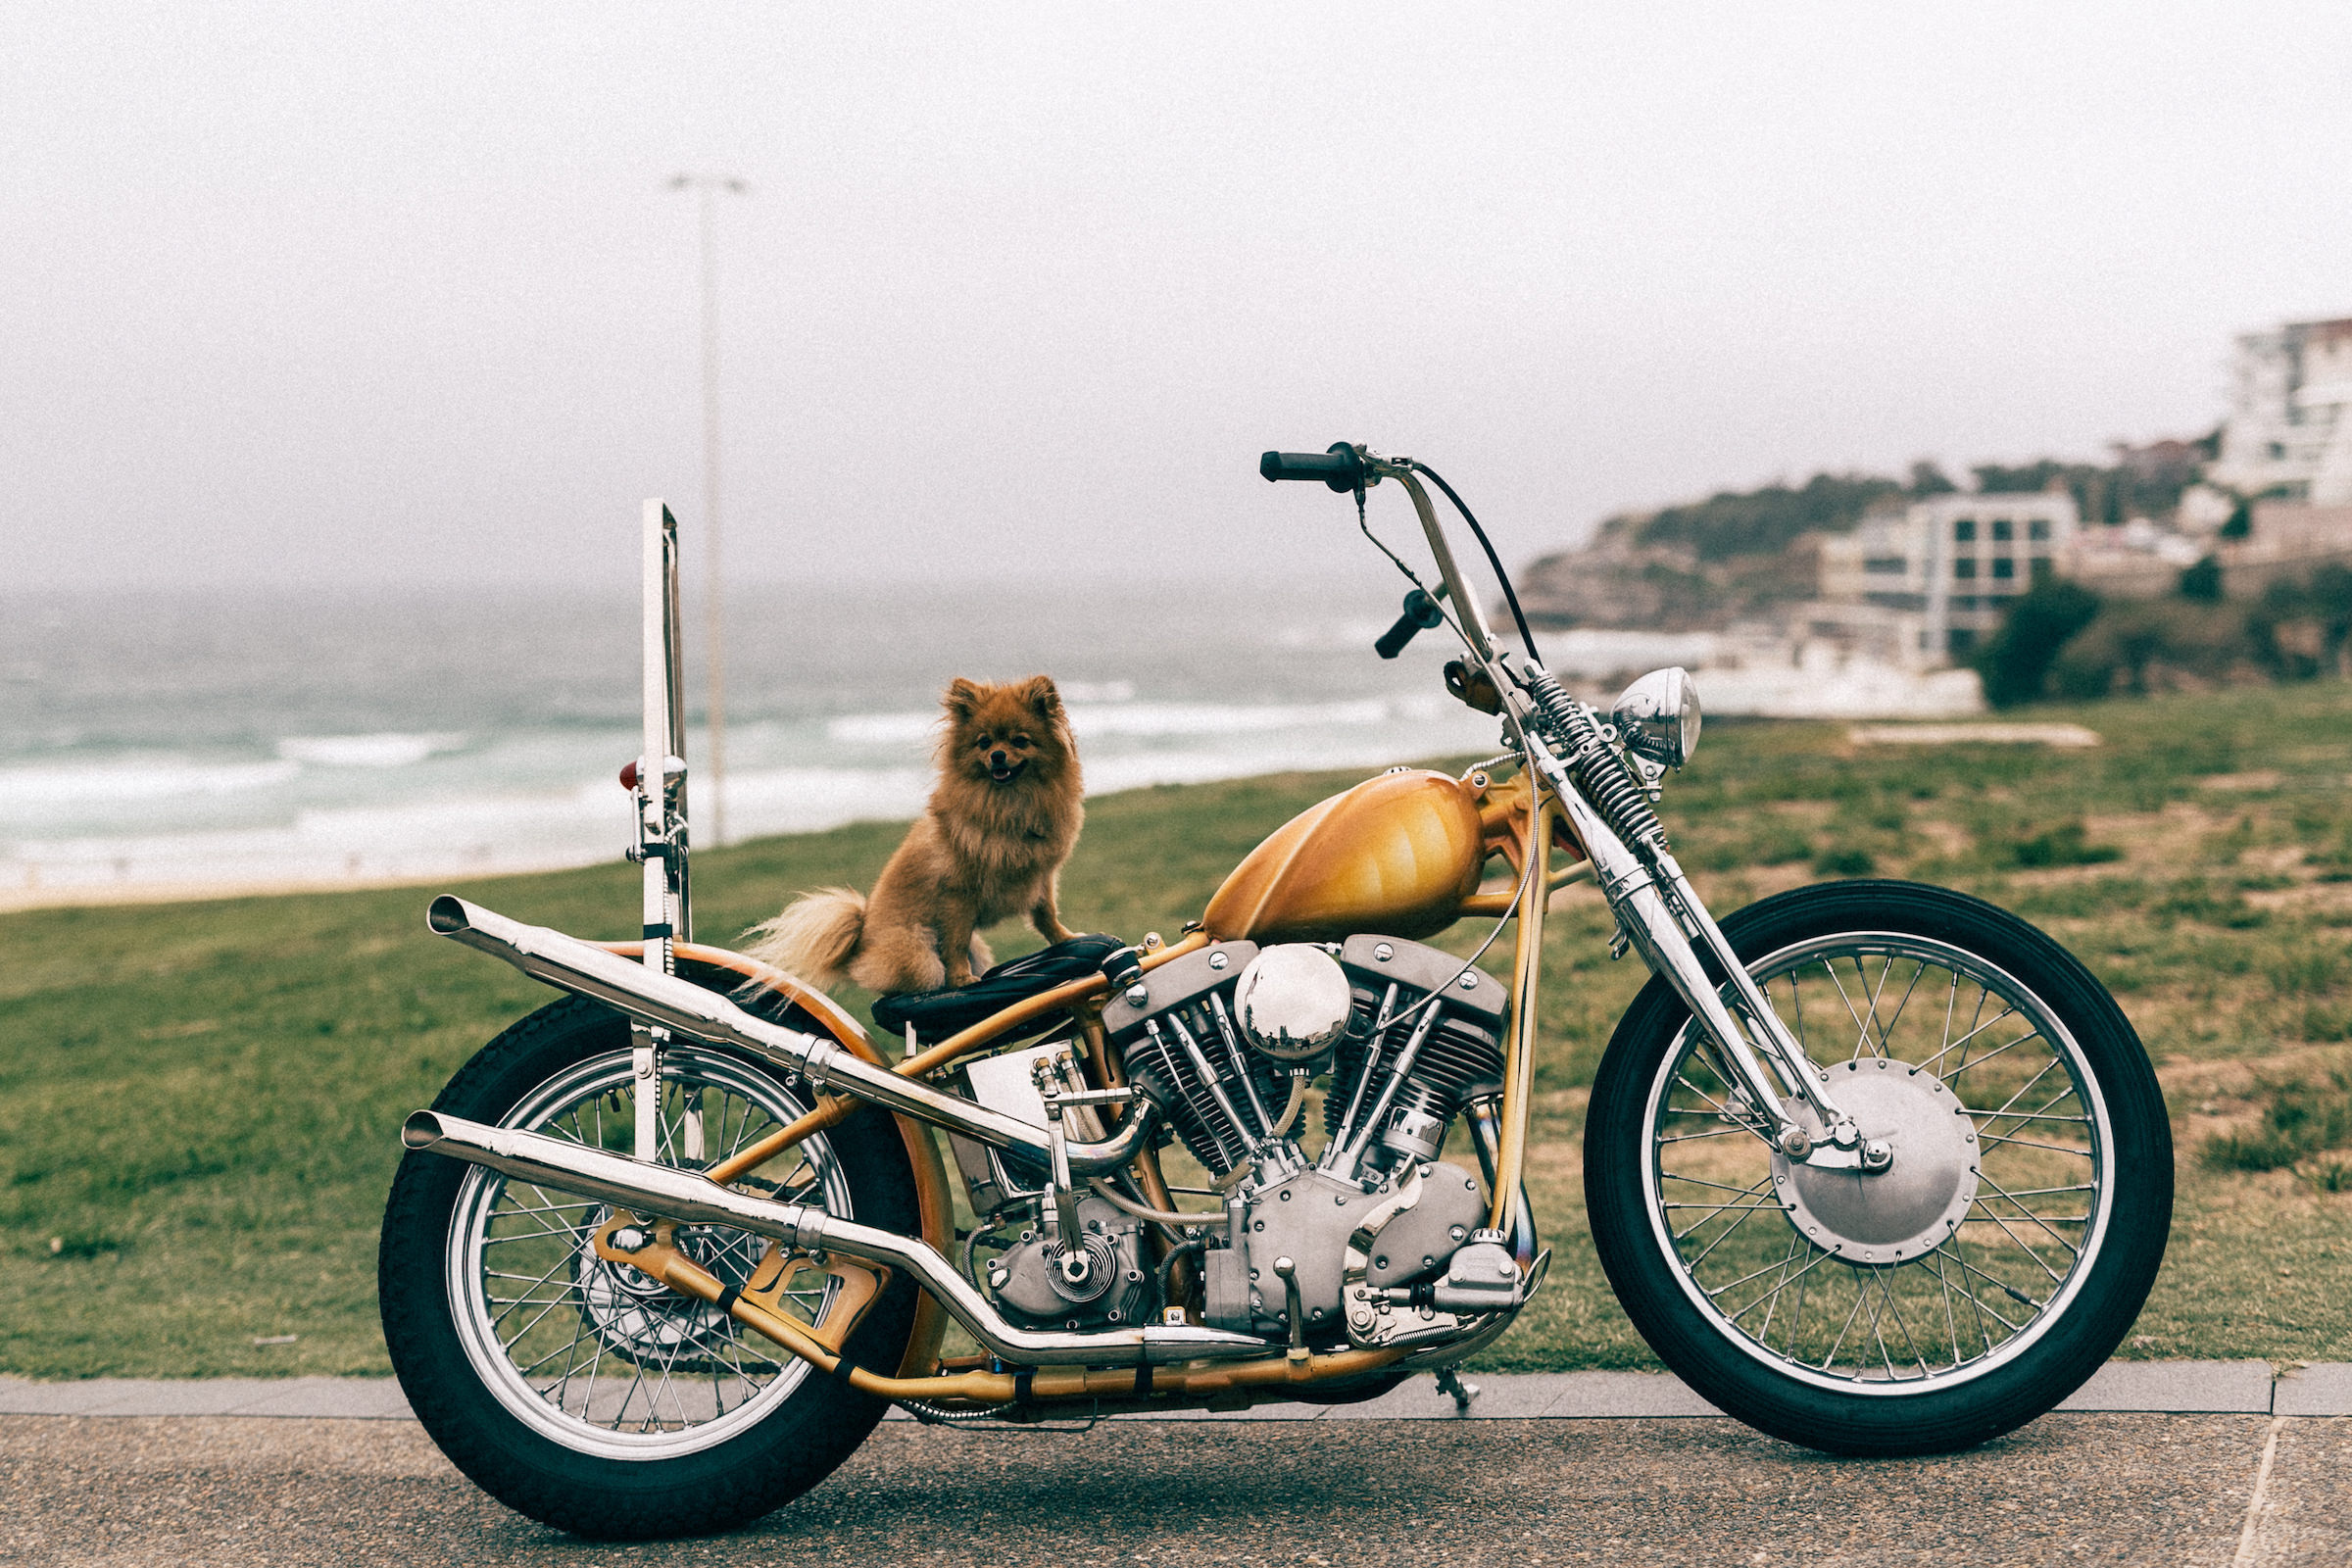 Dog on Motorcycle